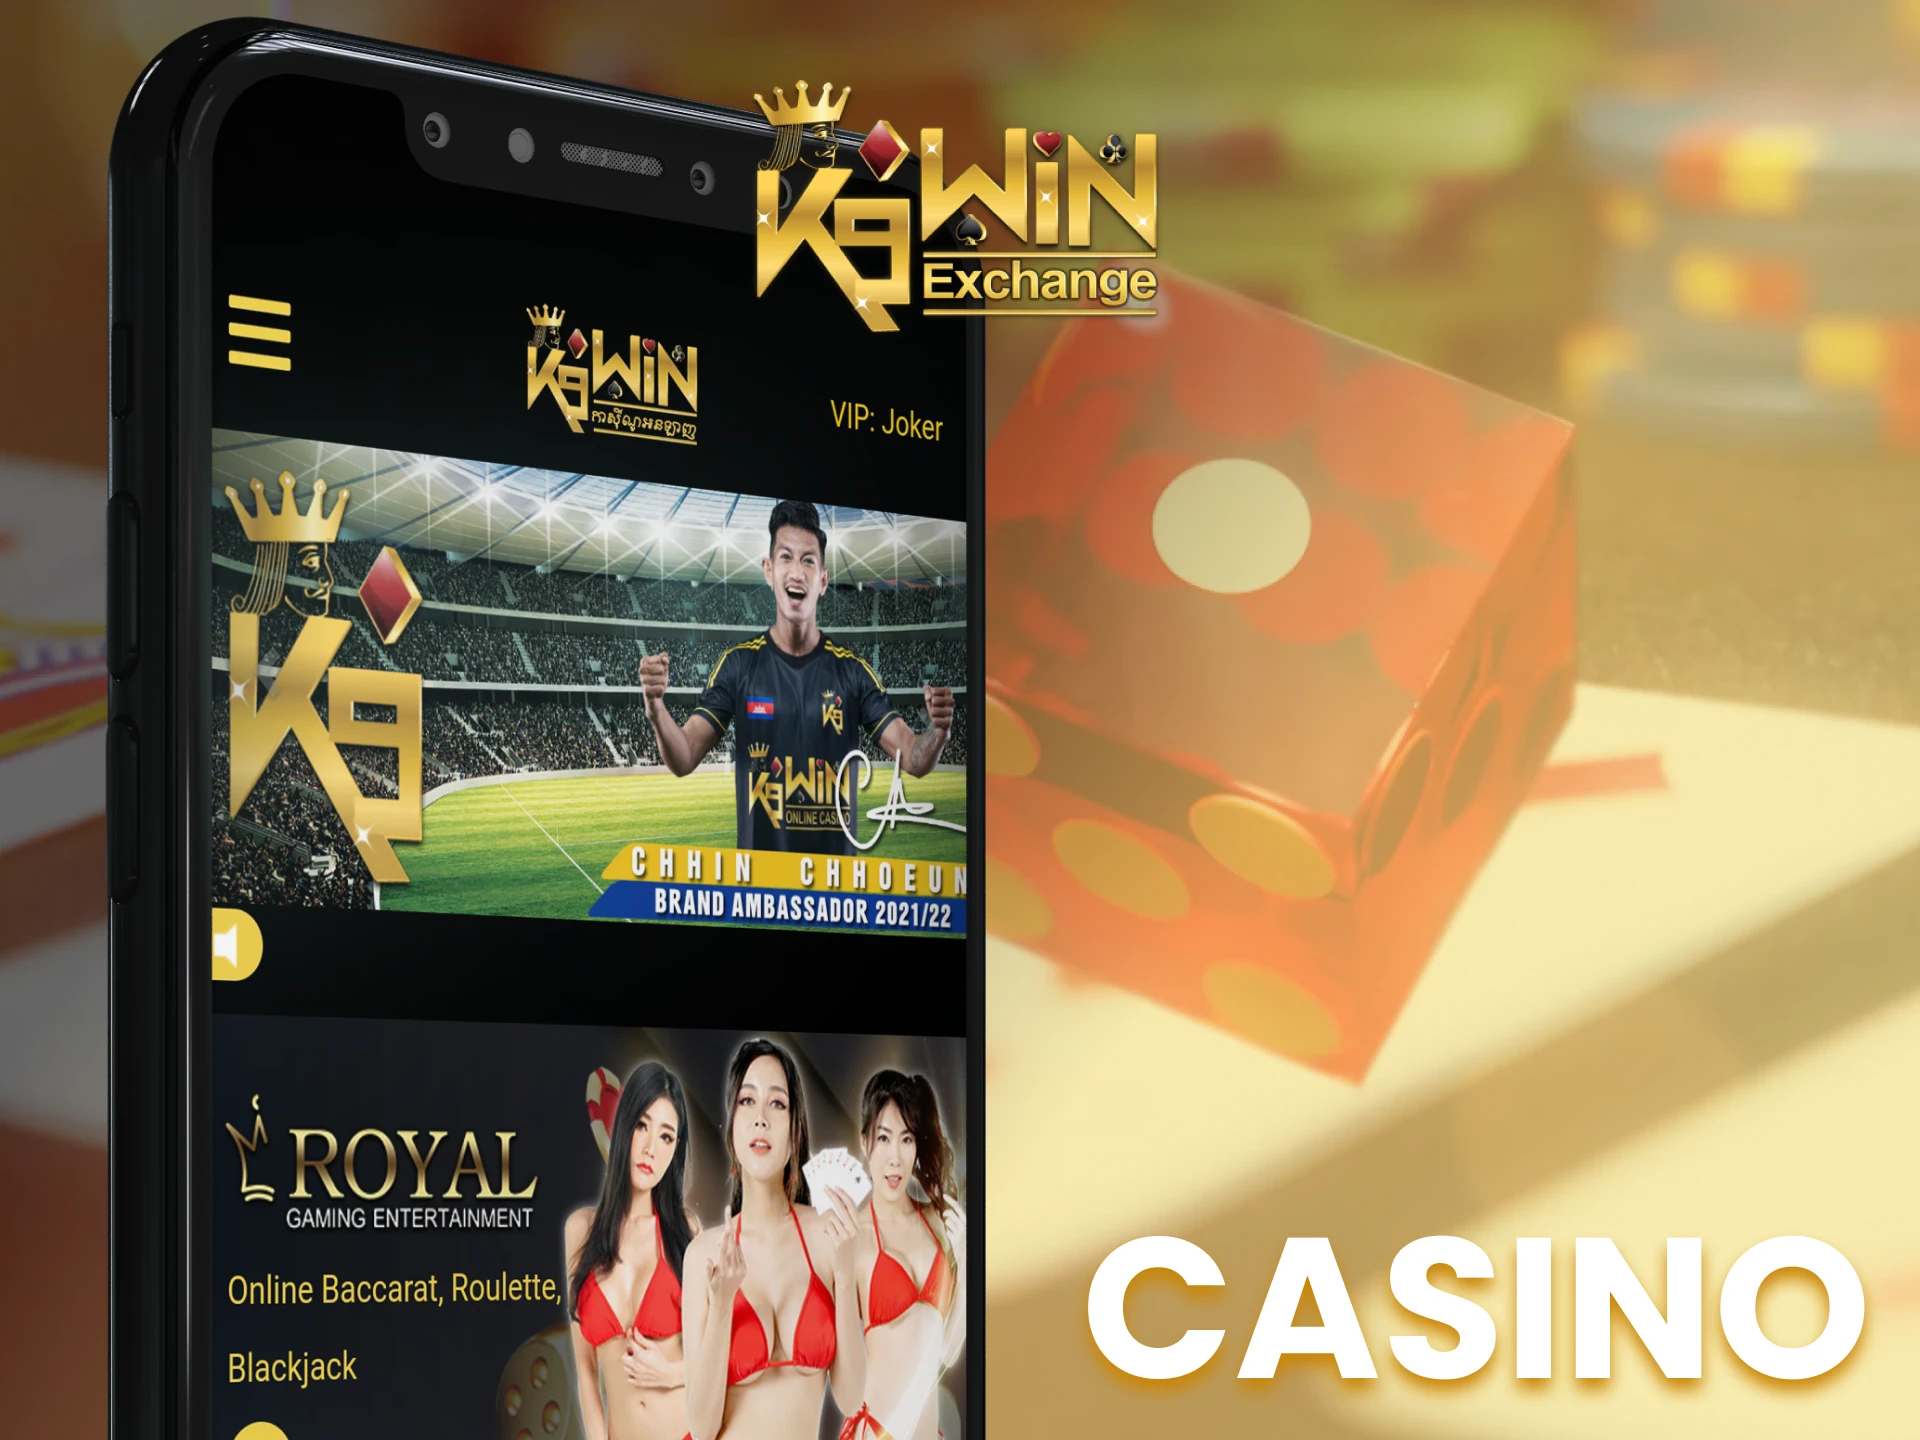 Play casino games in the K9Win app.